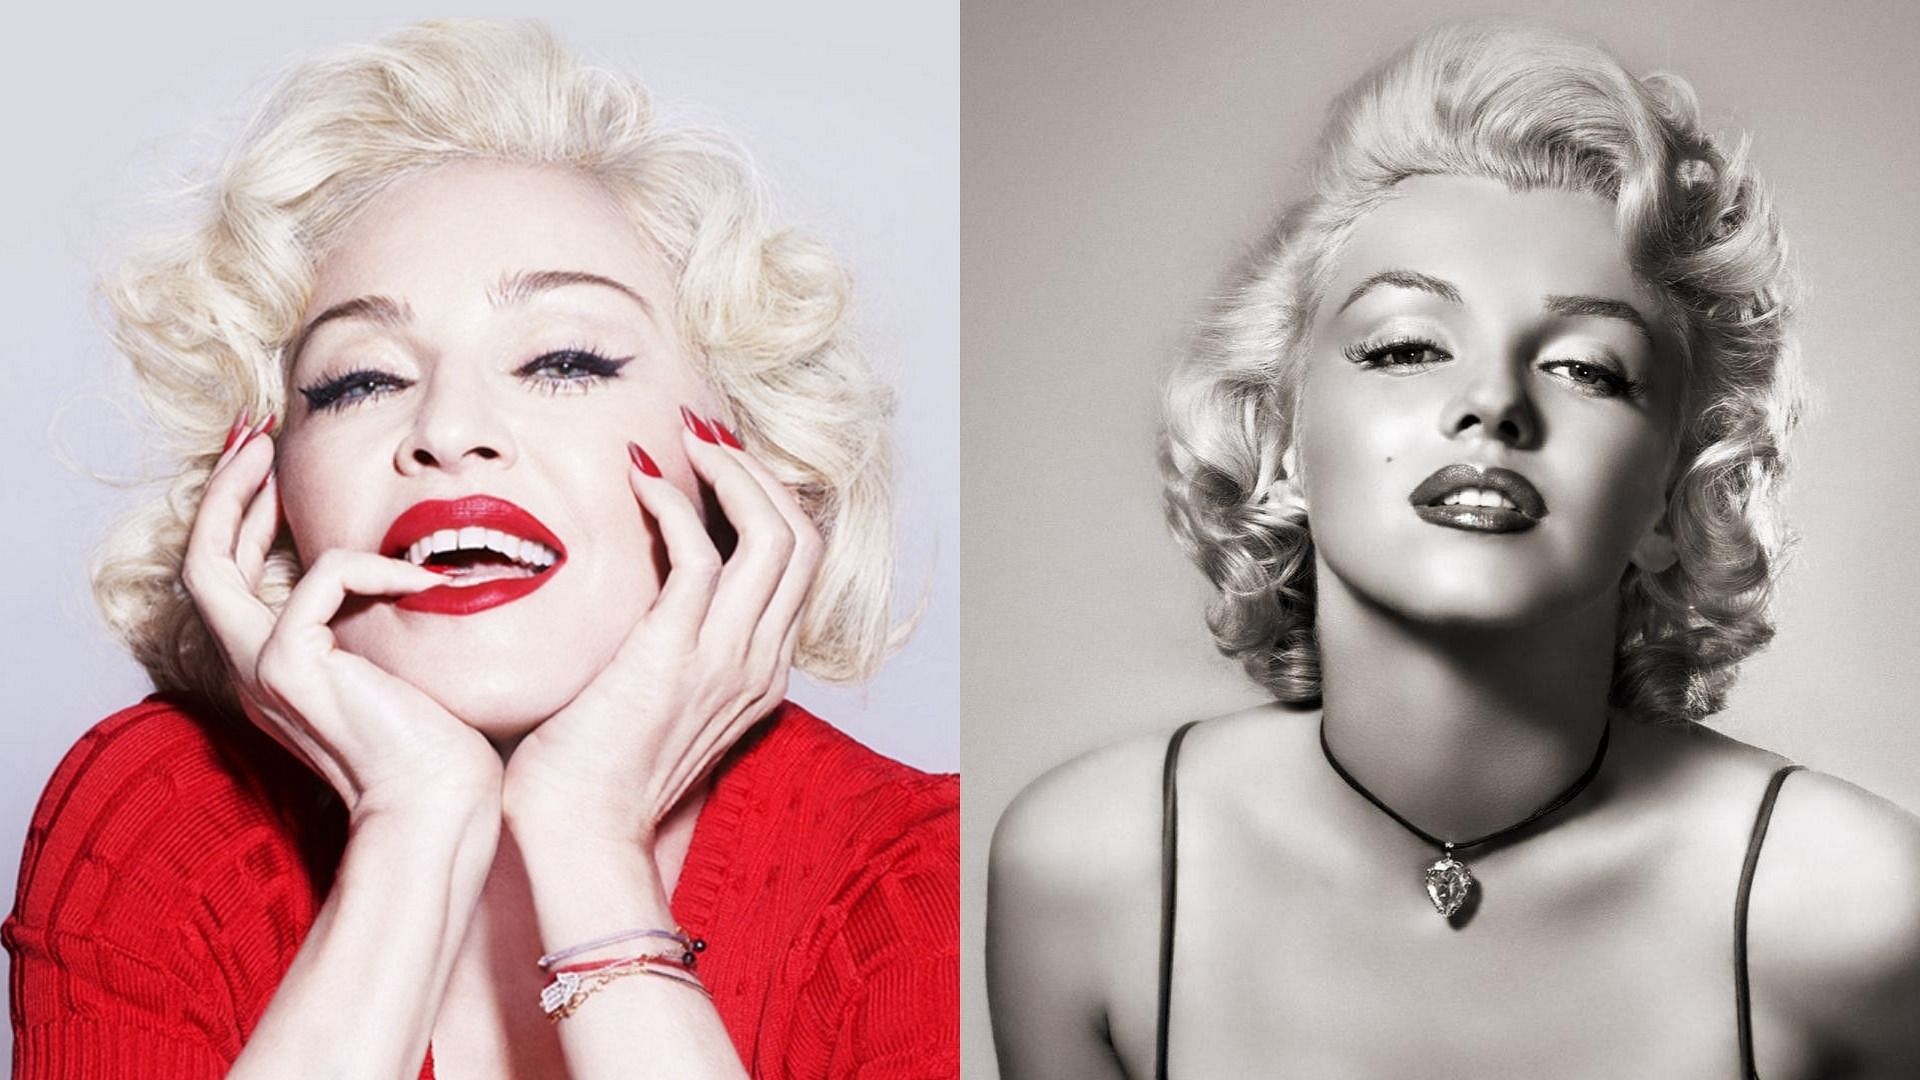 Madonna Recreating Marilyn Monroe